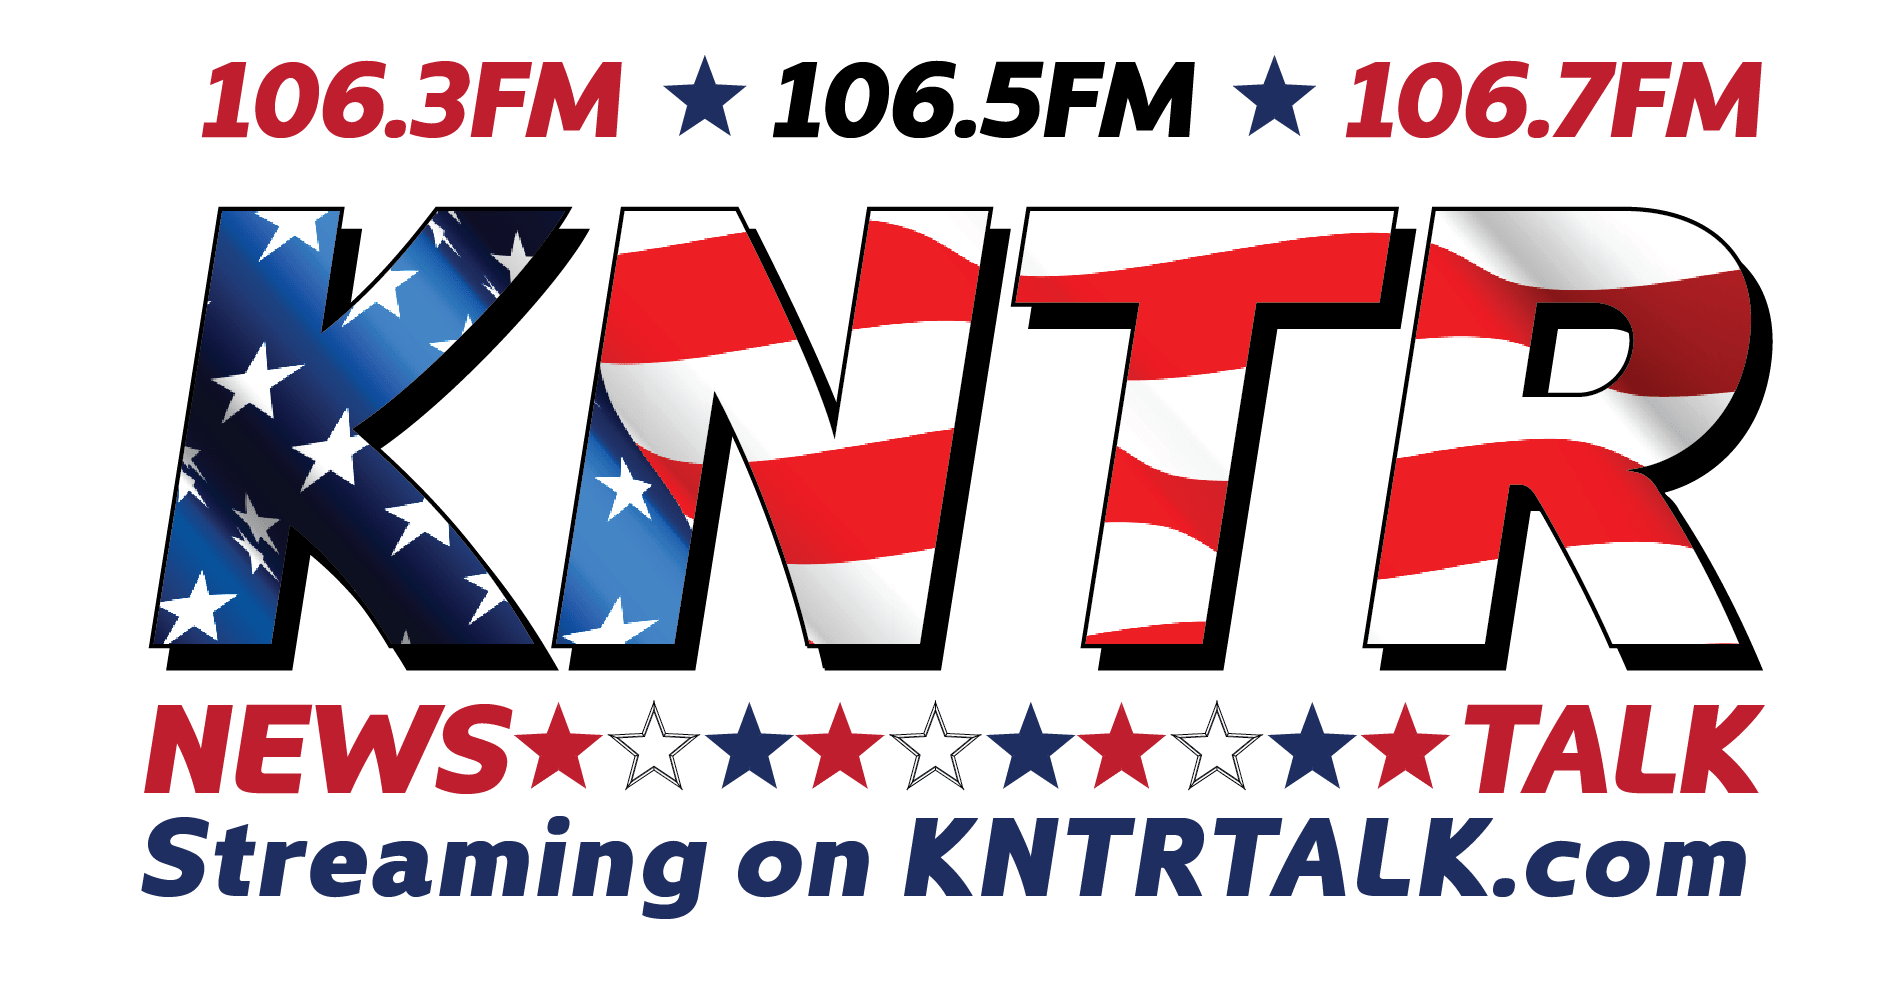 KNTR TALK RADIO is a sponsor